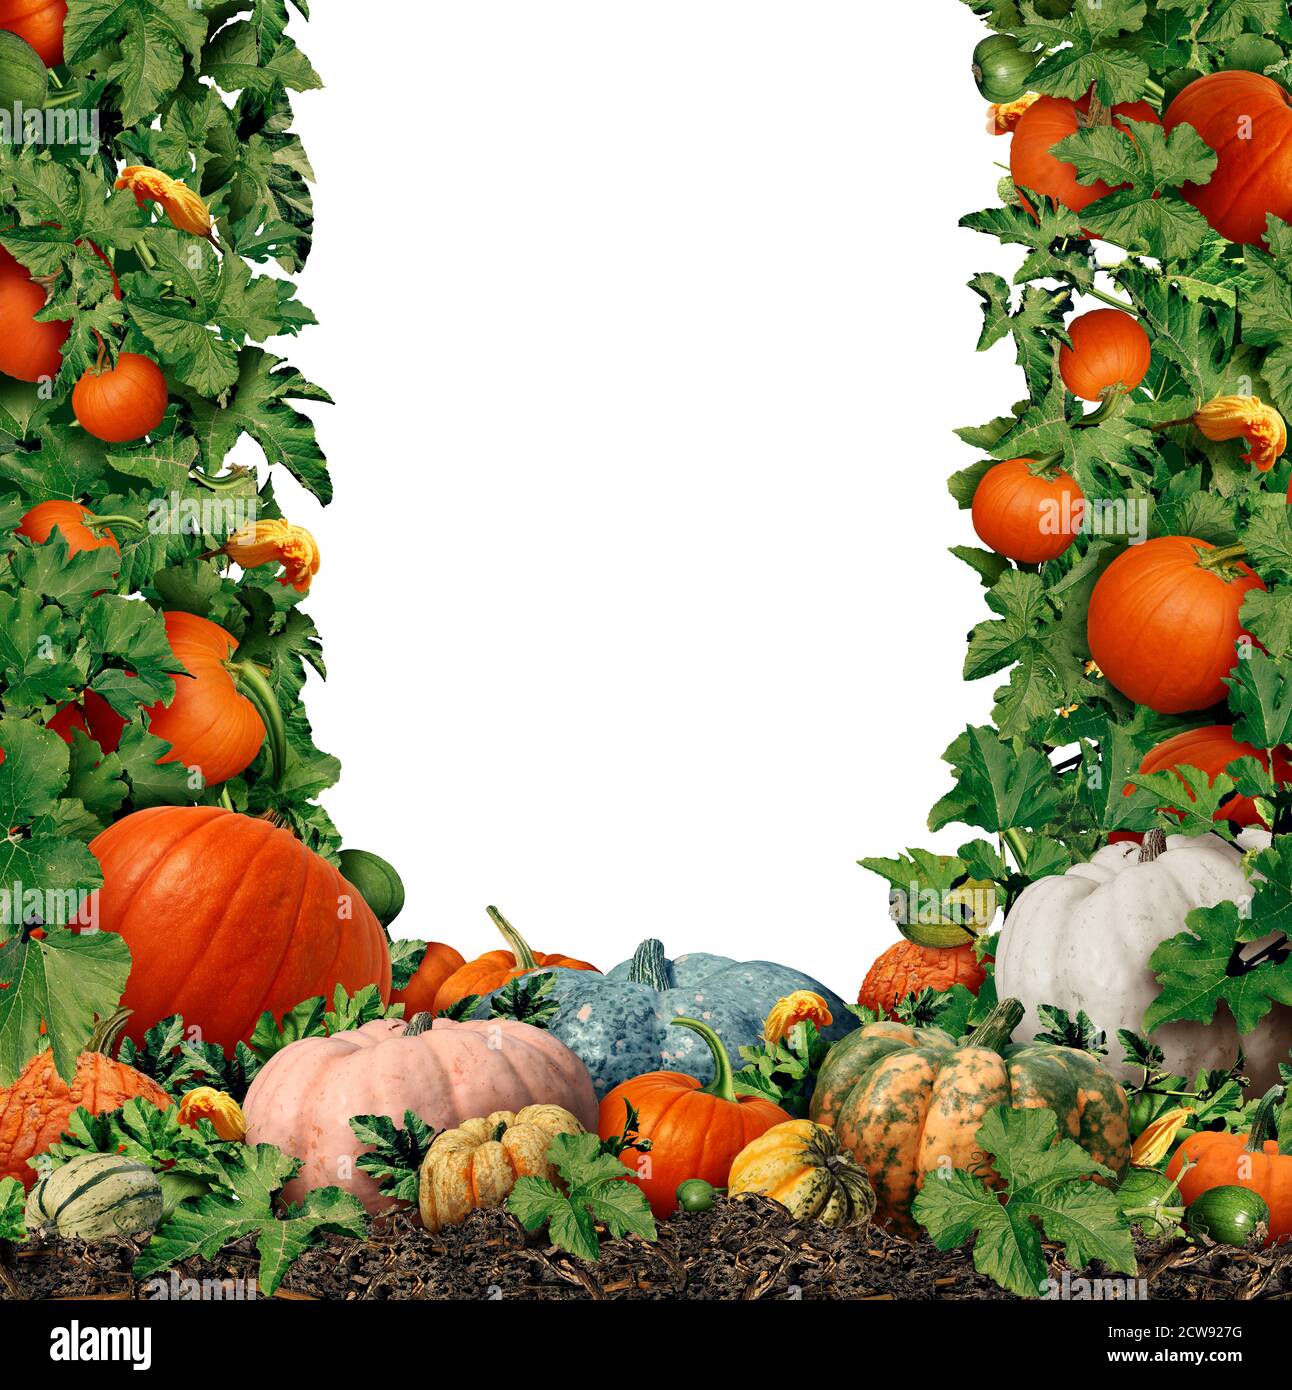 Autumn harvest blank frame as a pumpkin farm border design with squash harvested as an outdoor farmers market with fresh fruit as a seasonal. Stock Photo